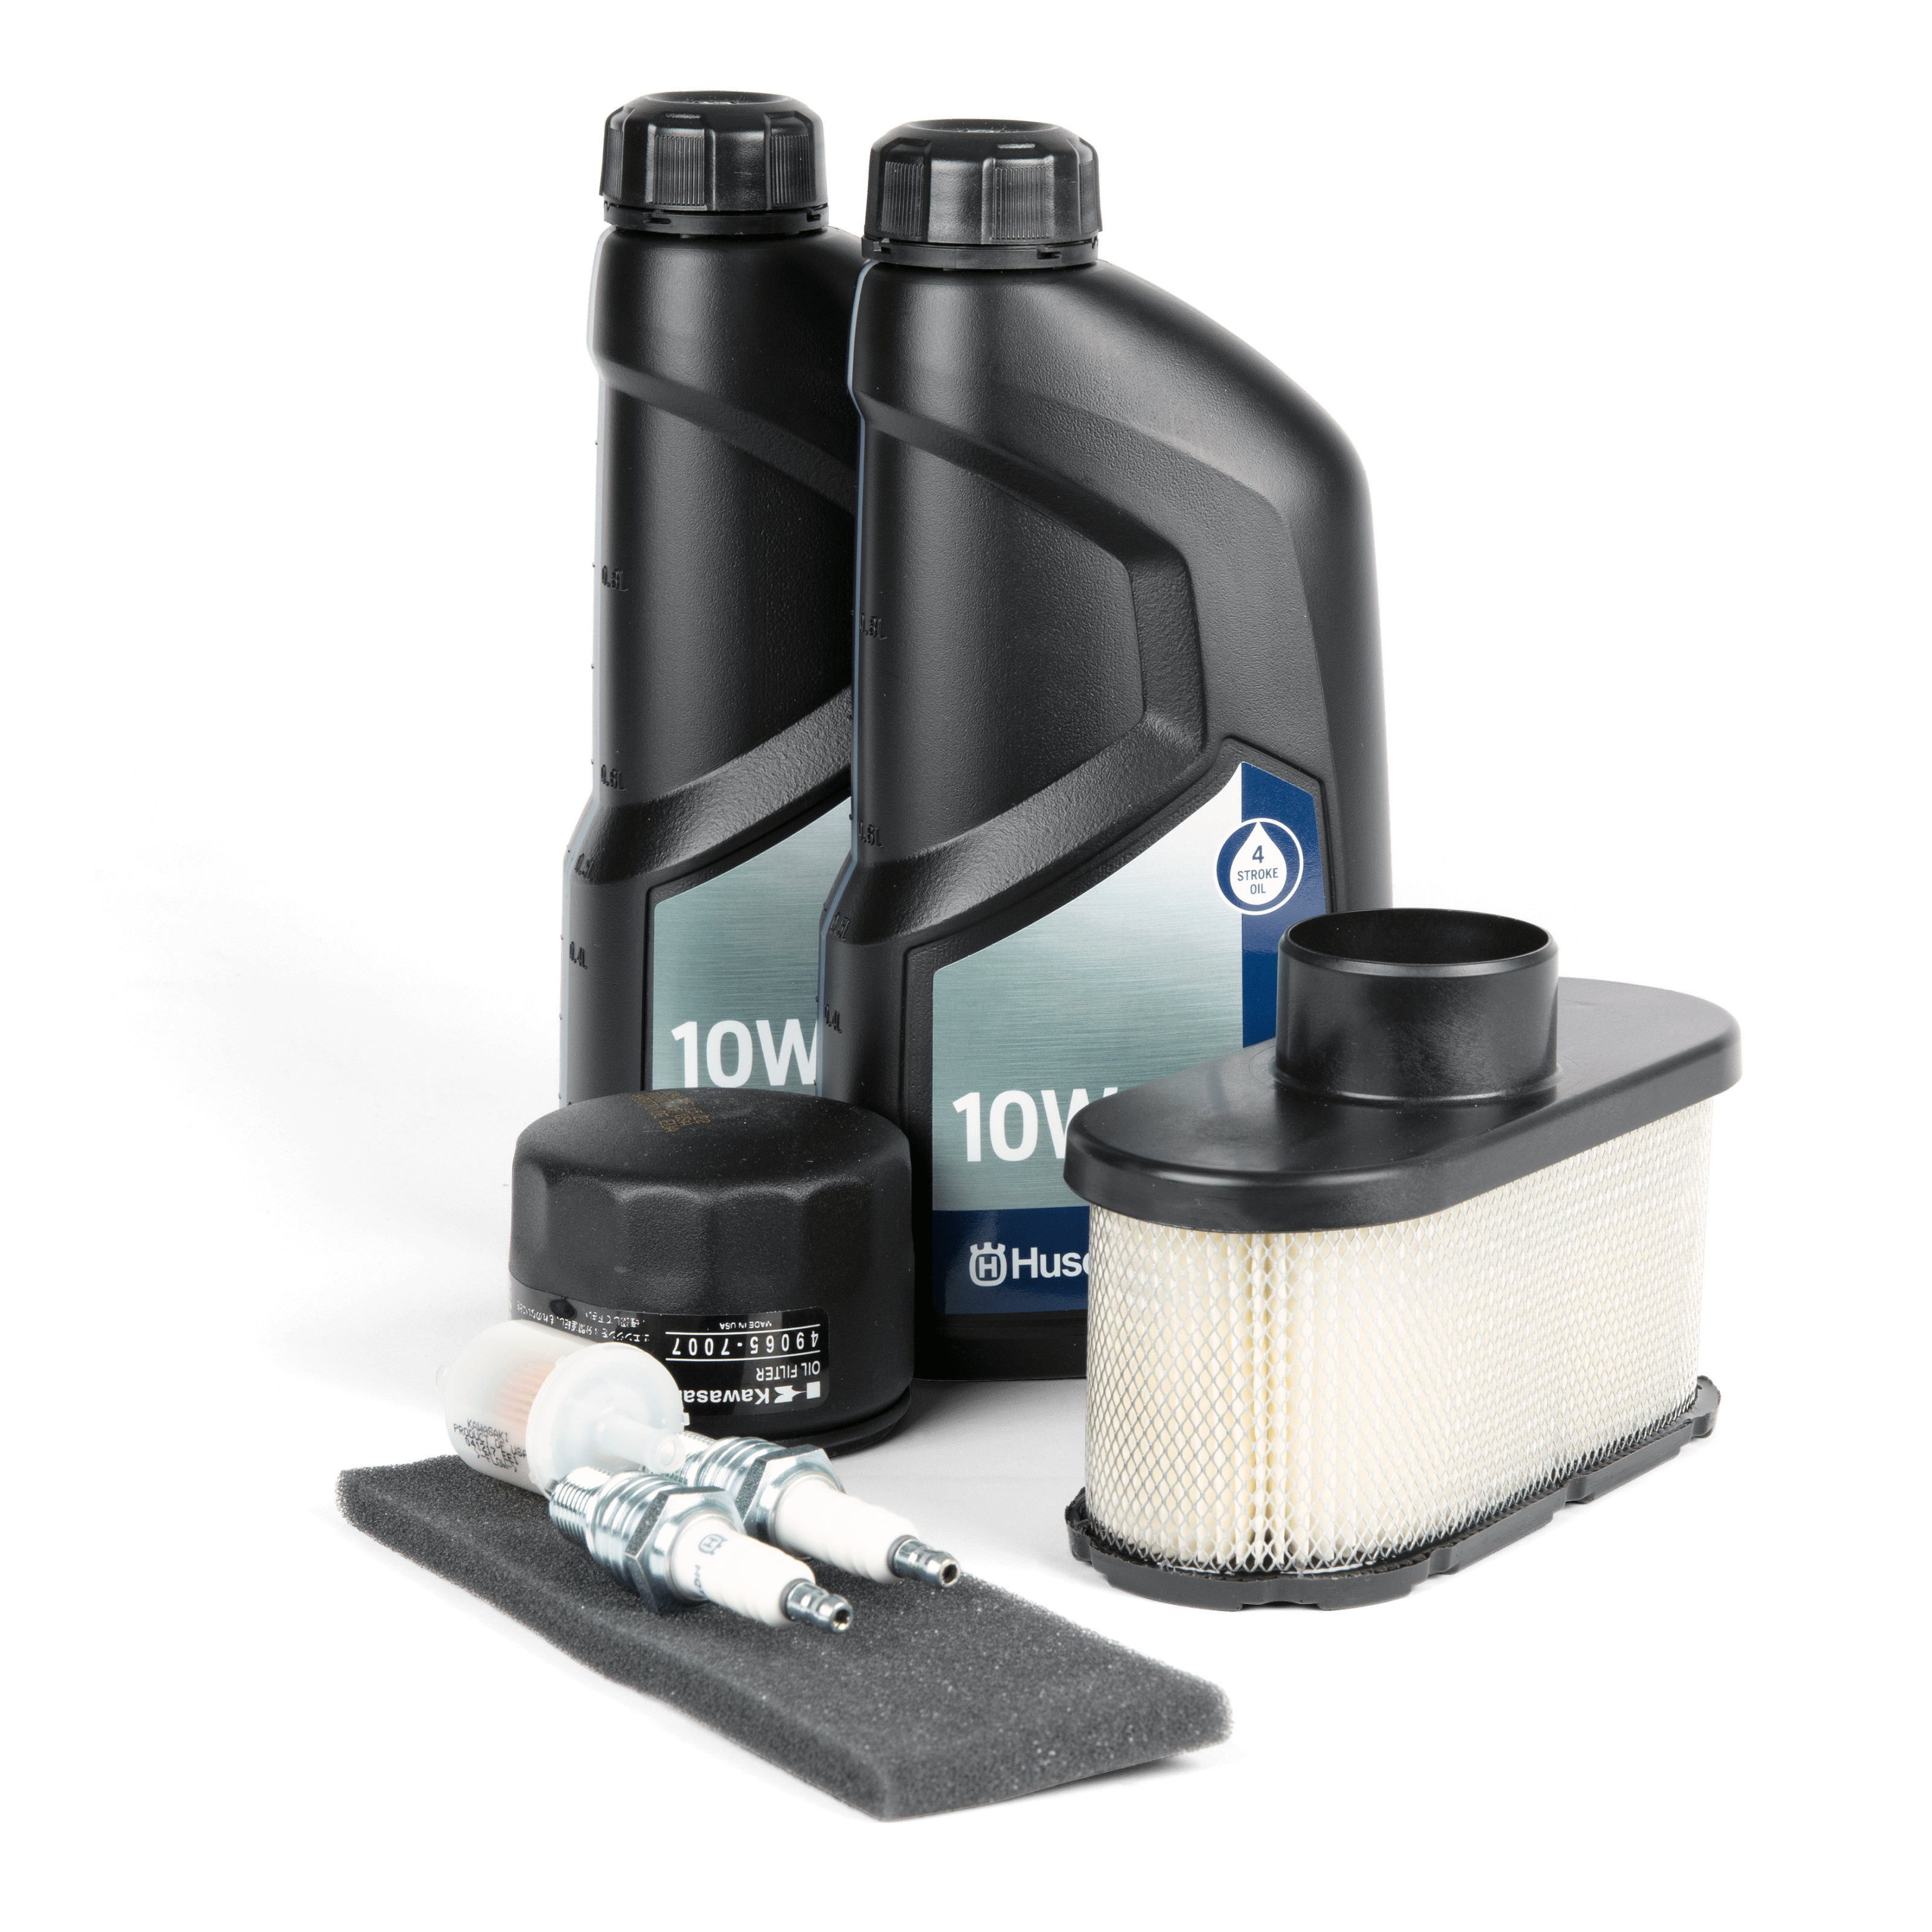 Care kit 2020 kit 1 for Kawa ride-on lawn mowers